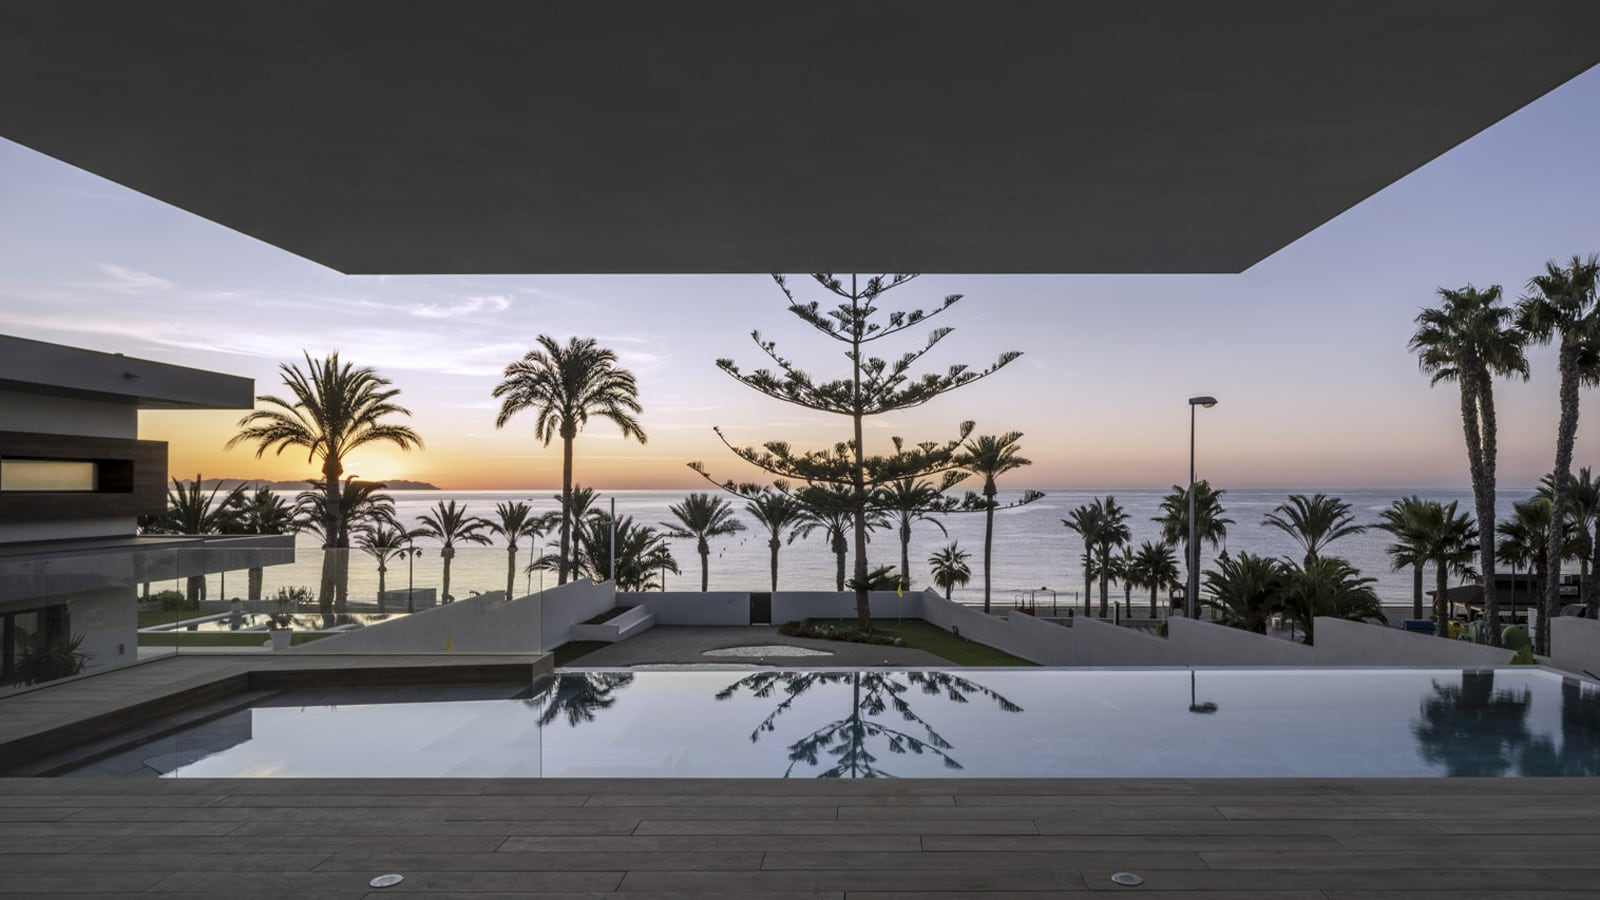 Studio Mariano Molina showcases geometric architecture in this sea-front property